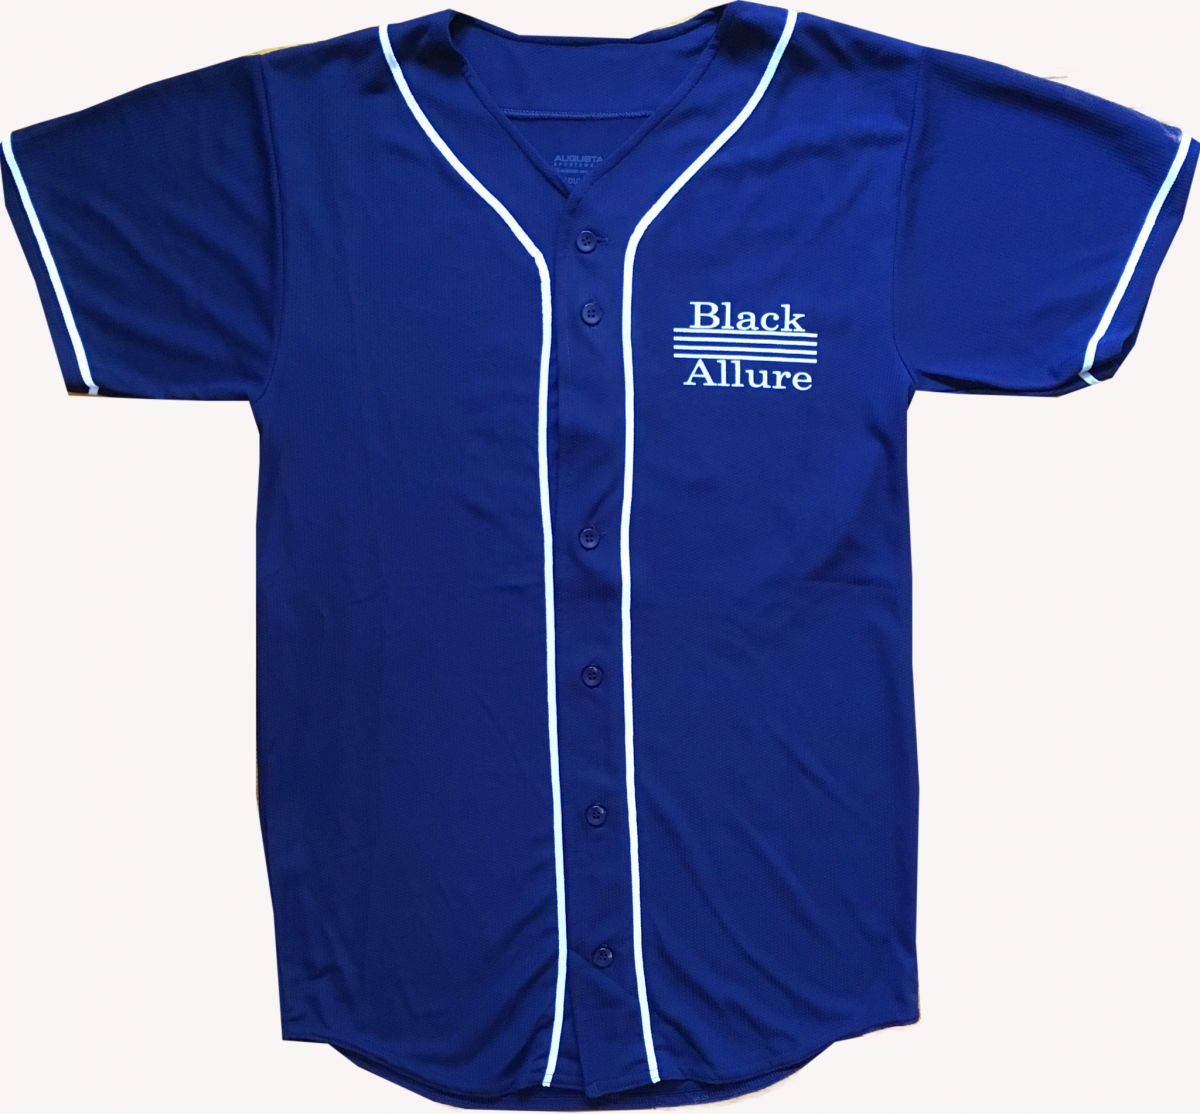 Black Allure Baseball Jersey Navy Blue
